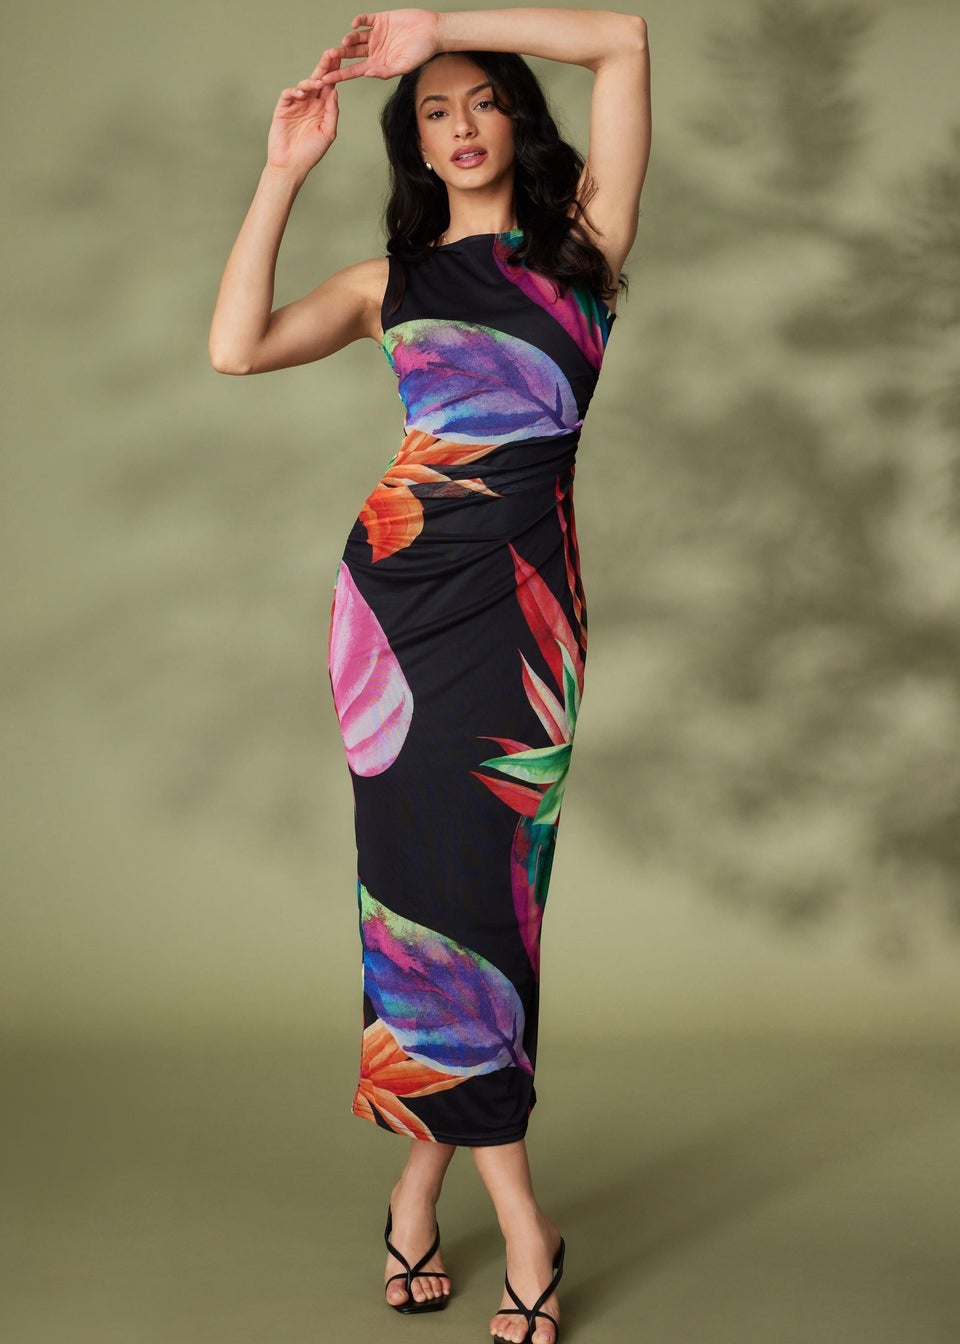 Quiz Black Mesh Tropical Print Midaxi Dress